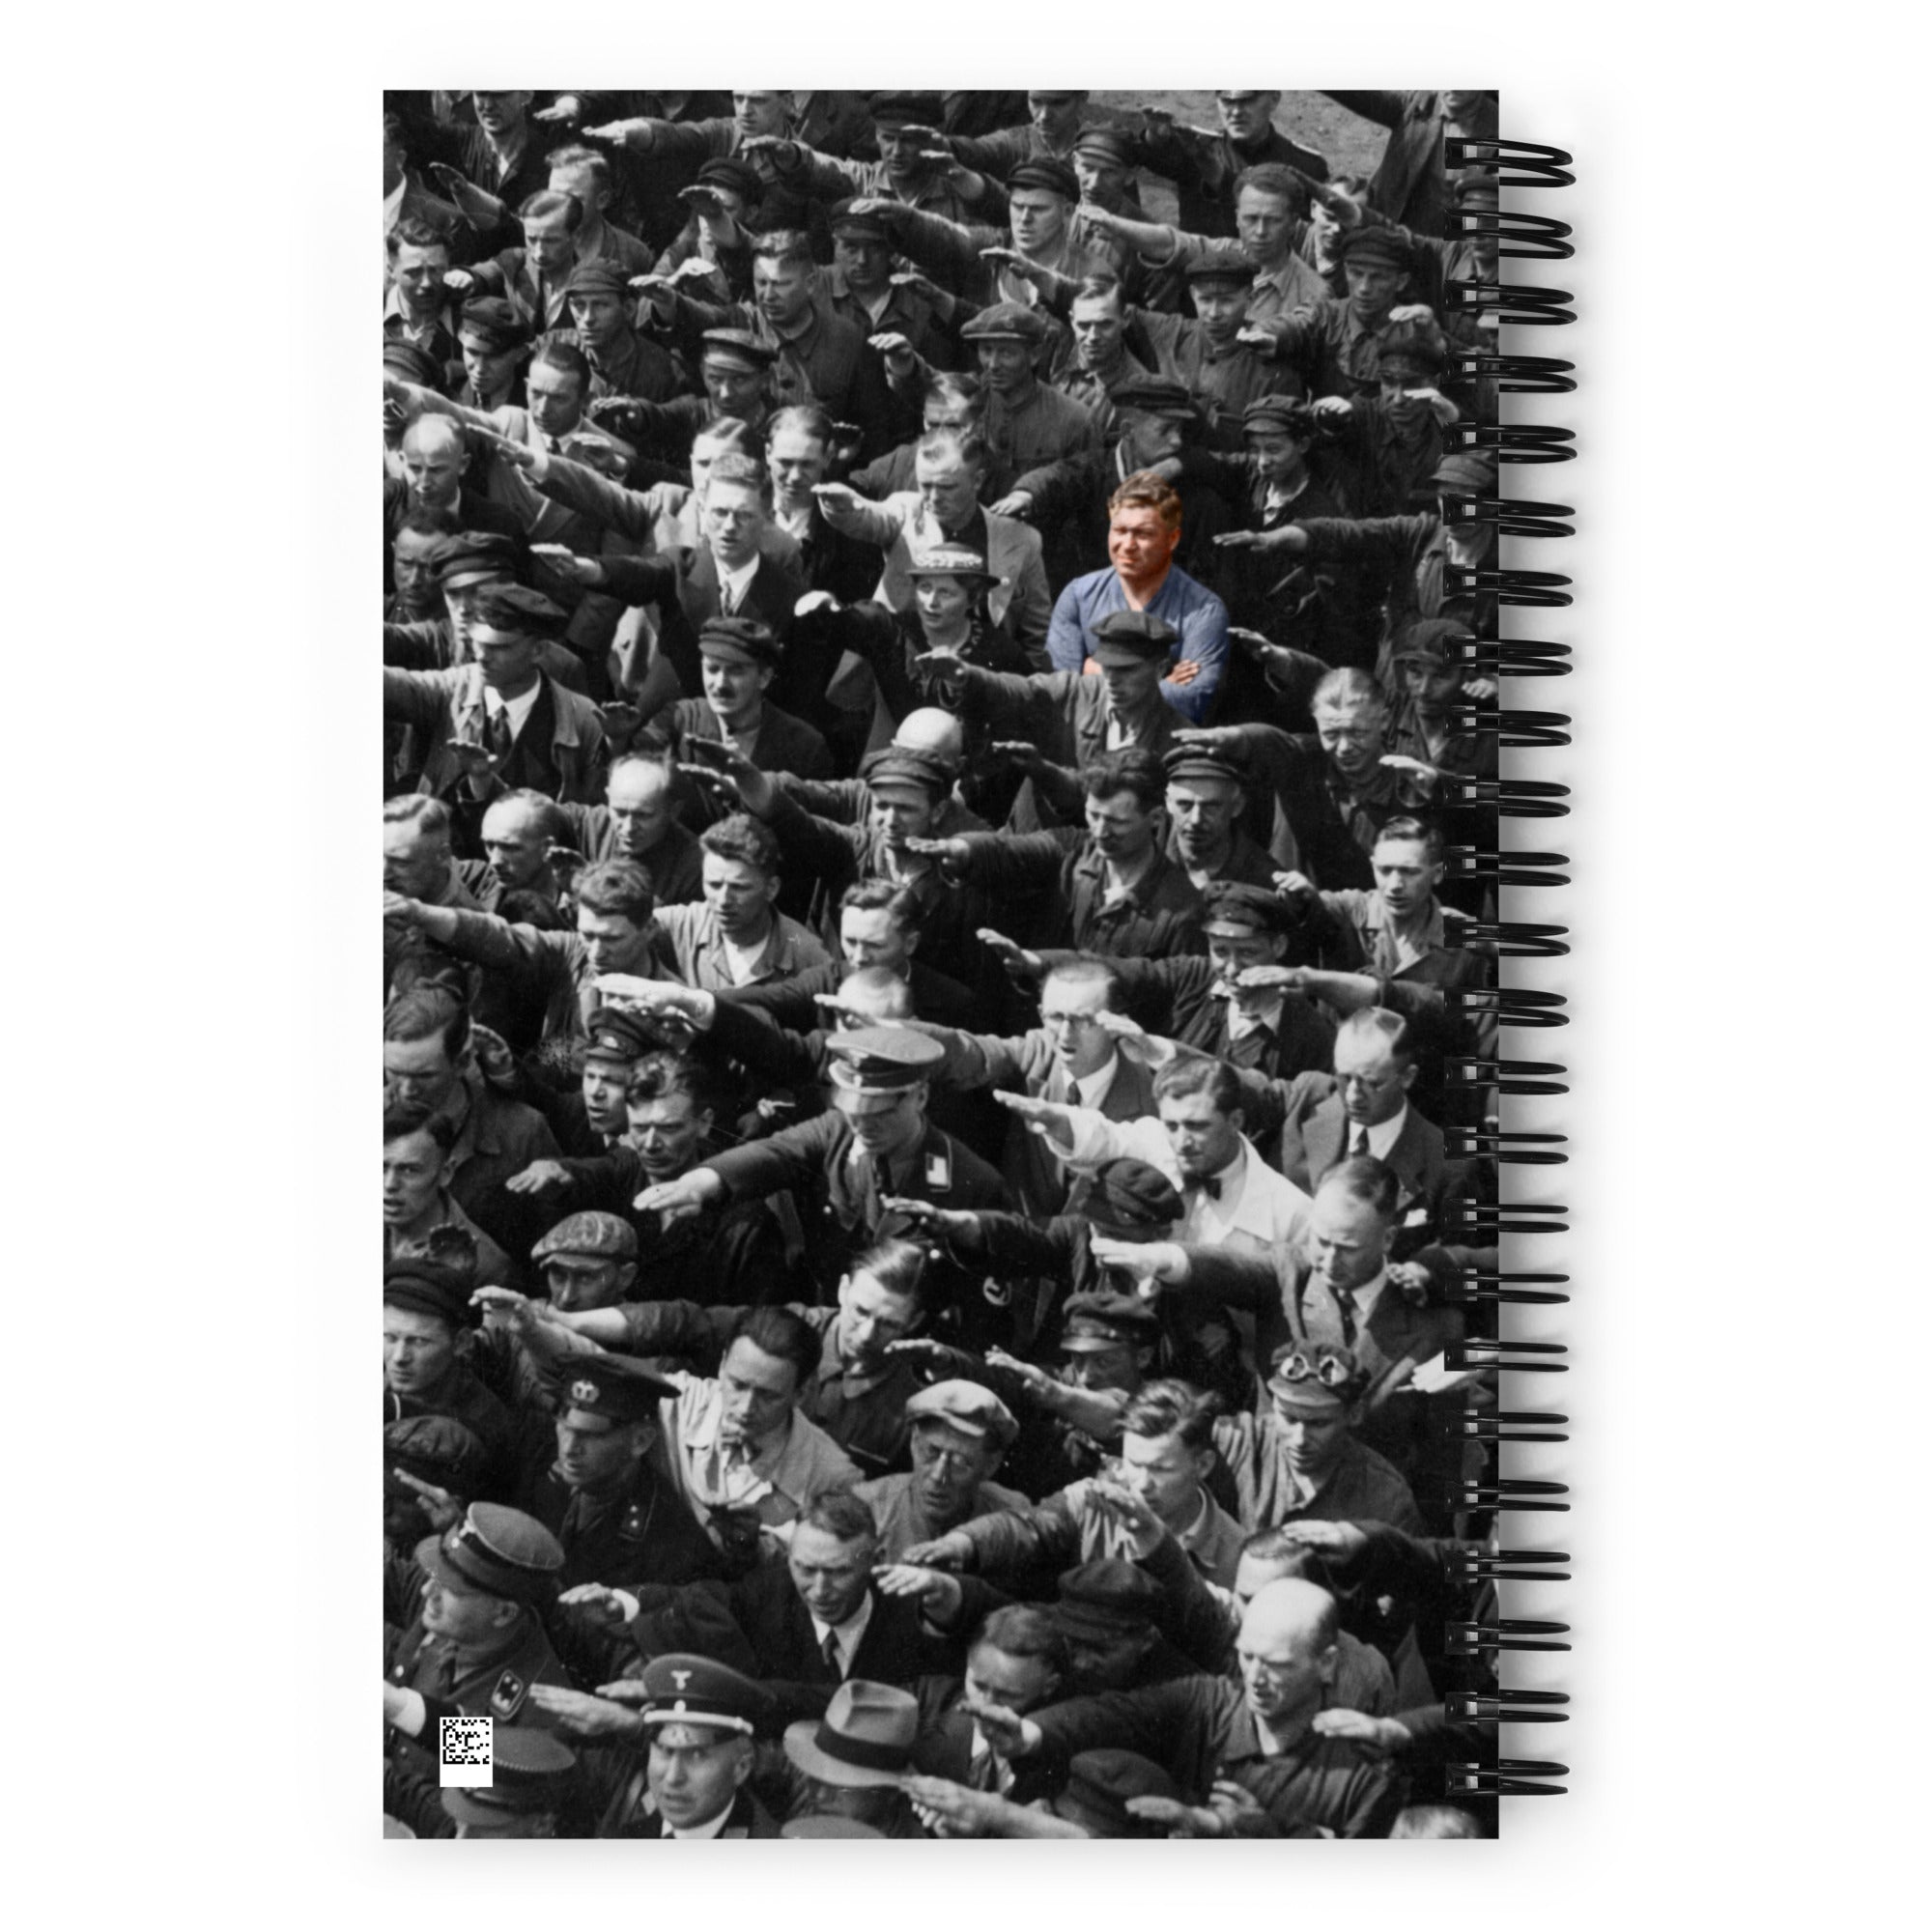 August Landmesser Dissent Spiral notebook